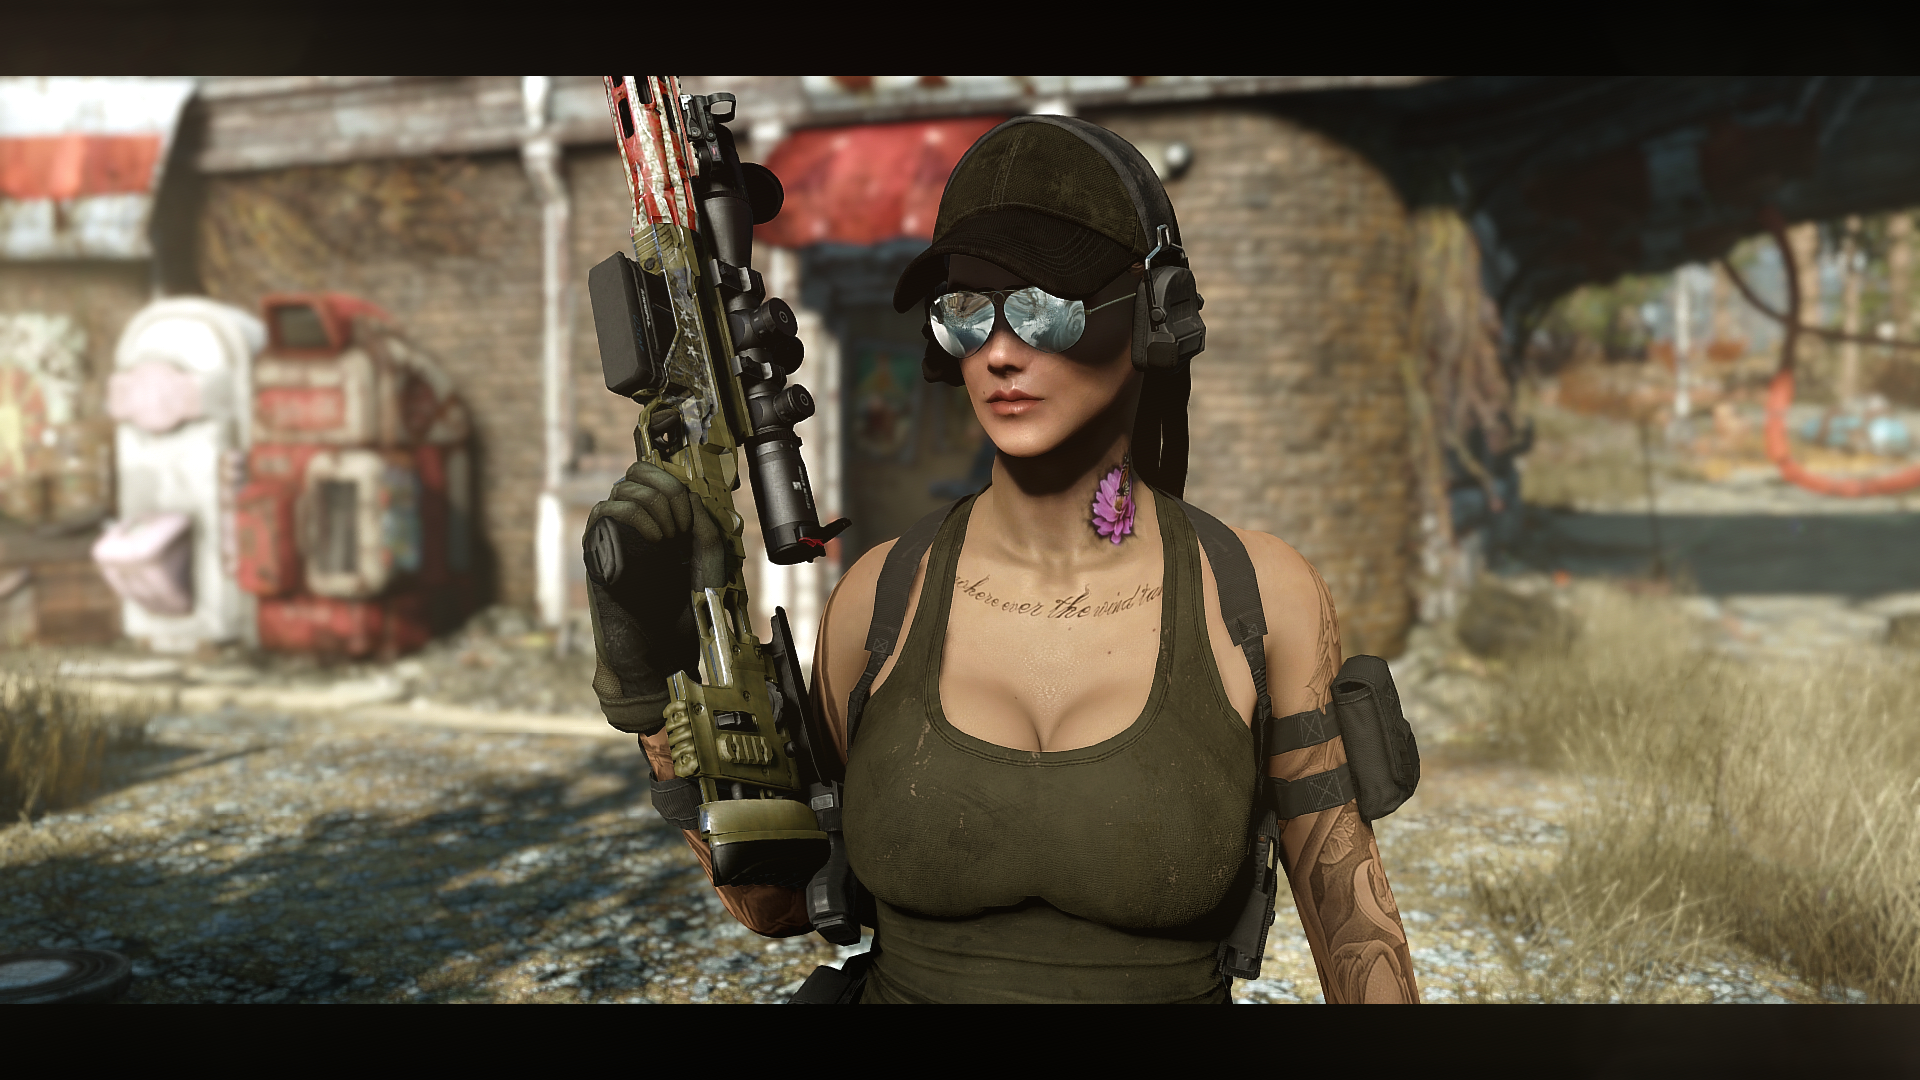 gun girl at Fallout 4 Nexus and community